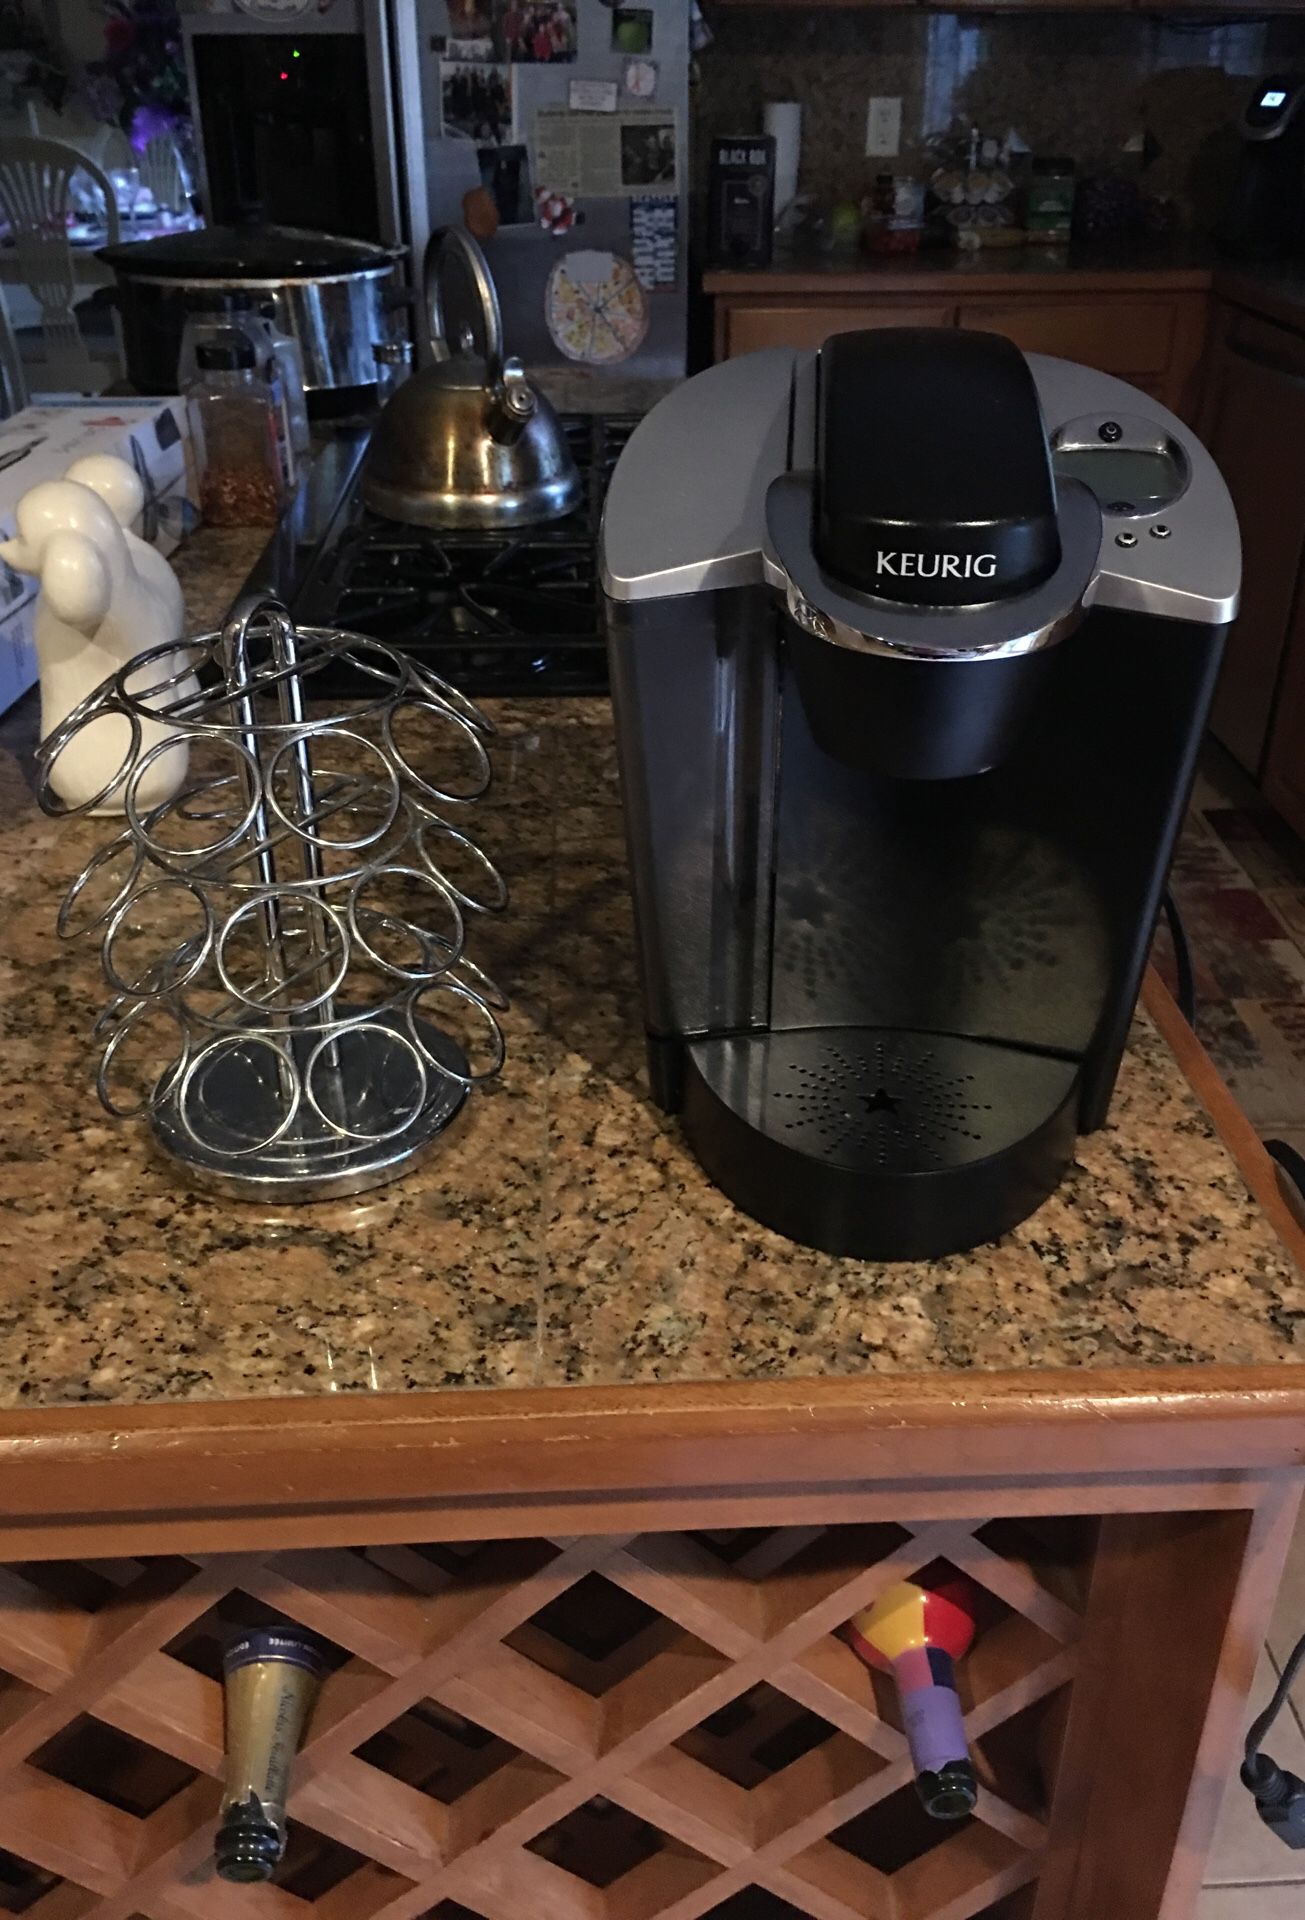 Keurig coffee maker with holder